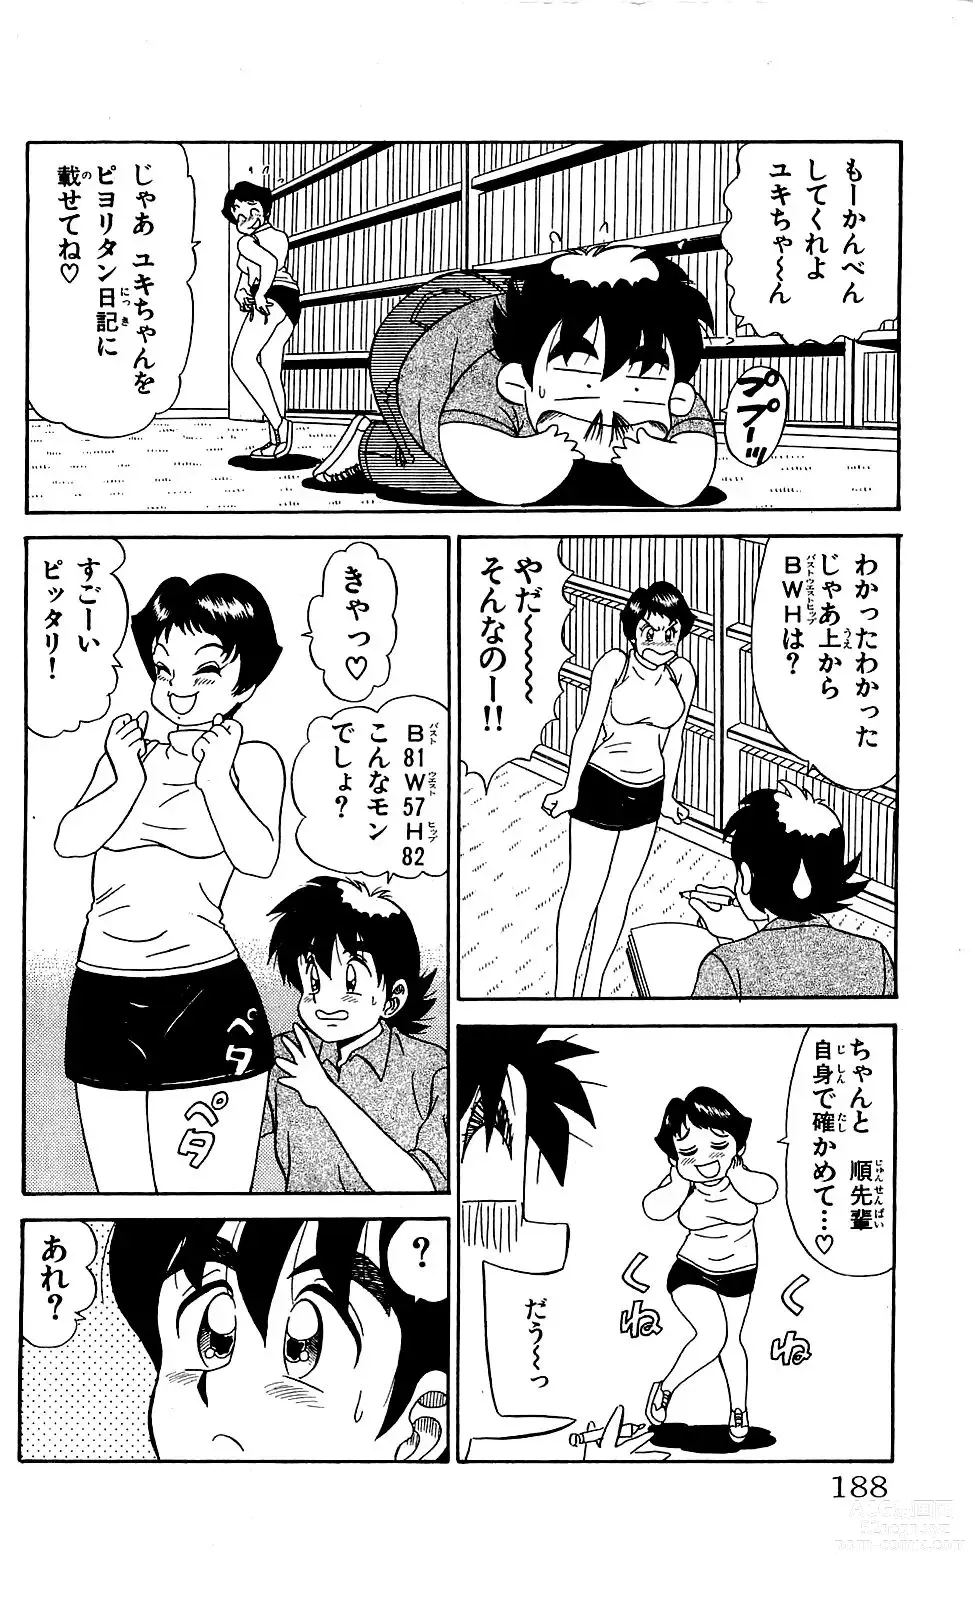 Page 186 of manga Orette Piyoritan Vol. 1